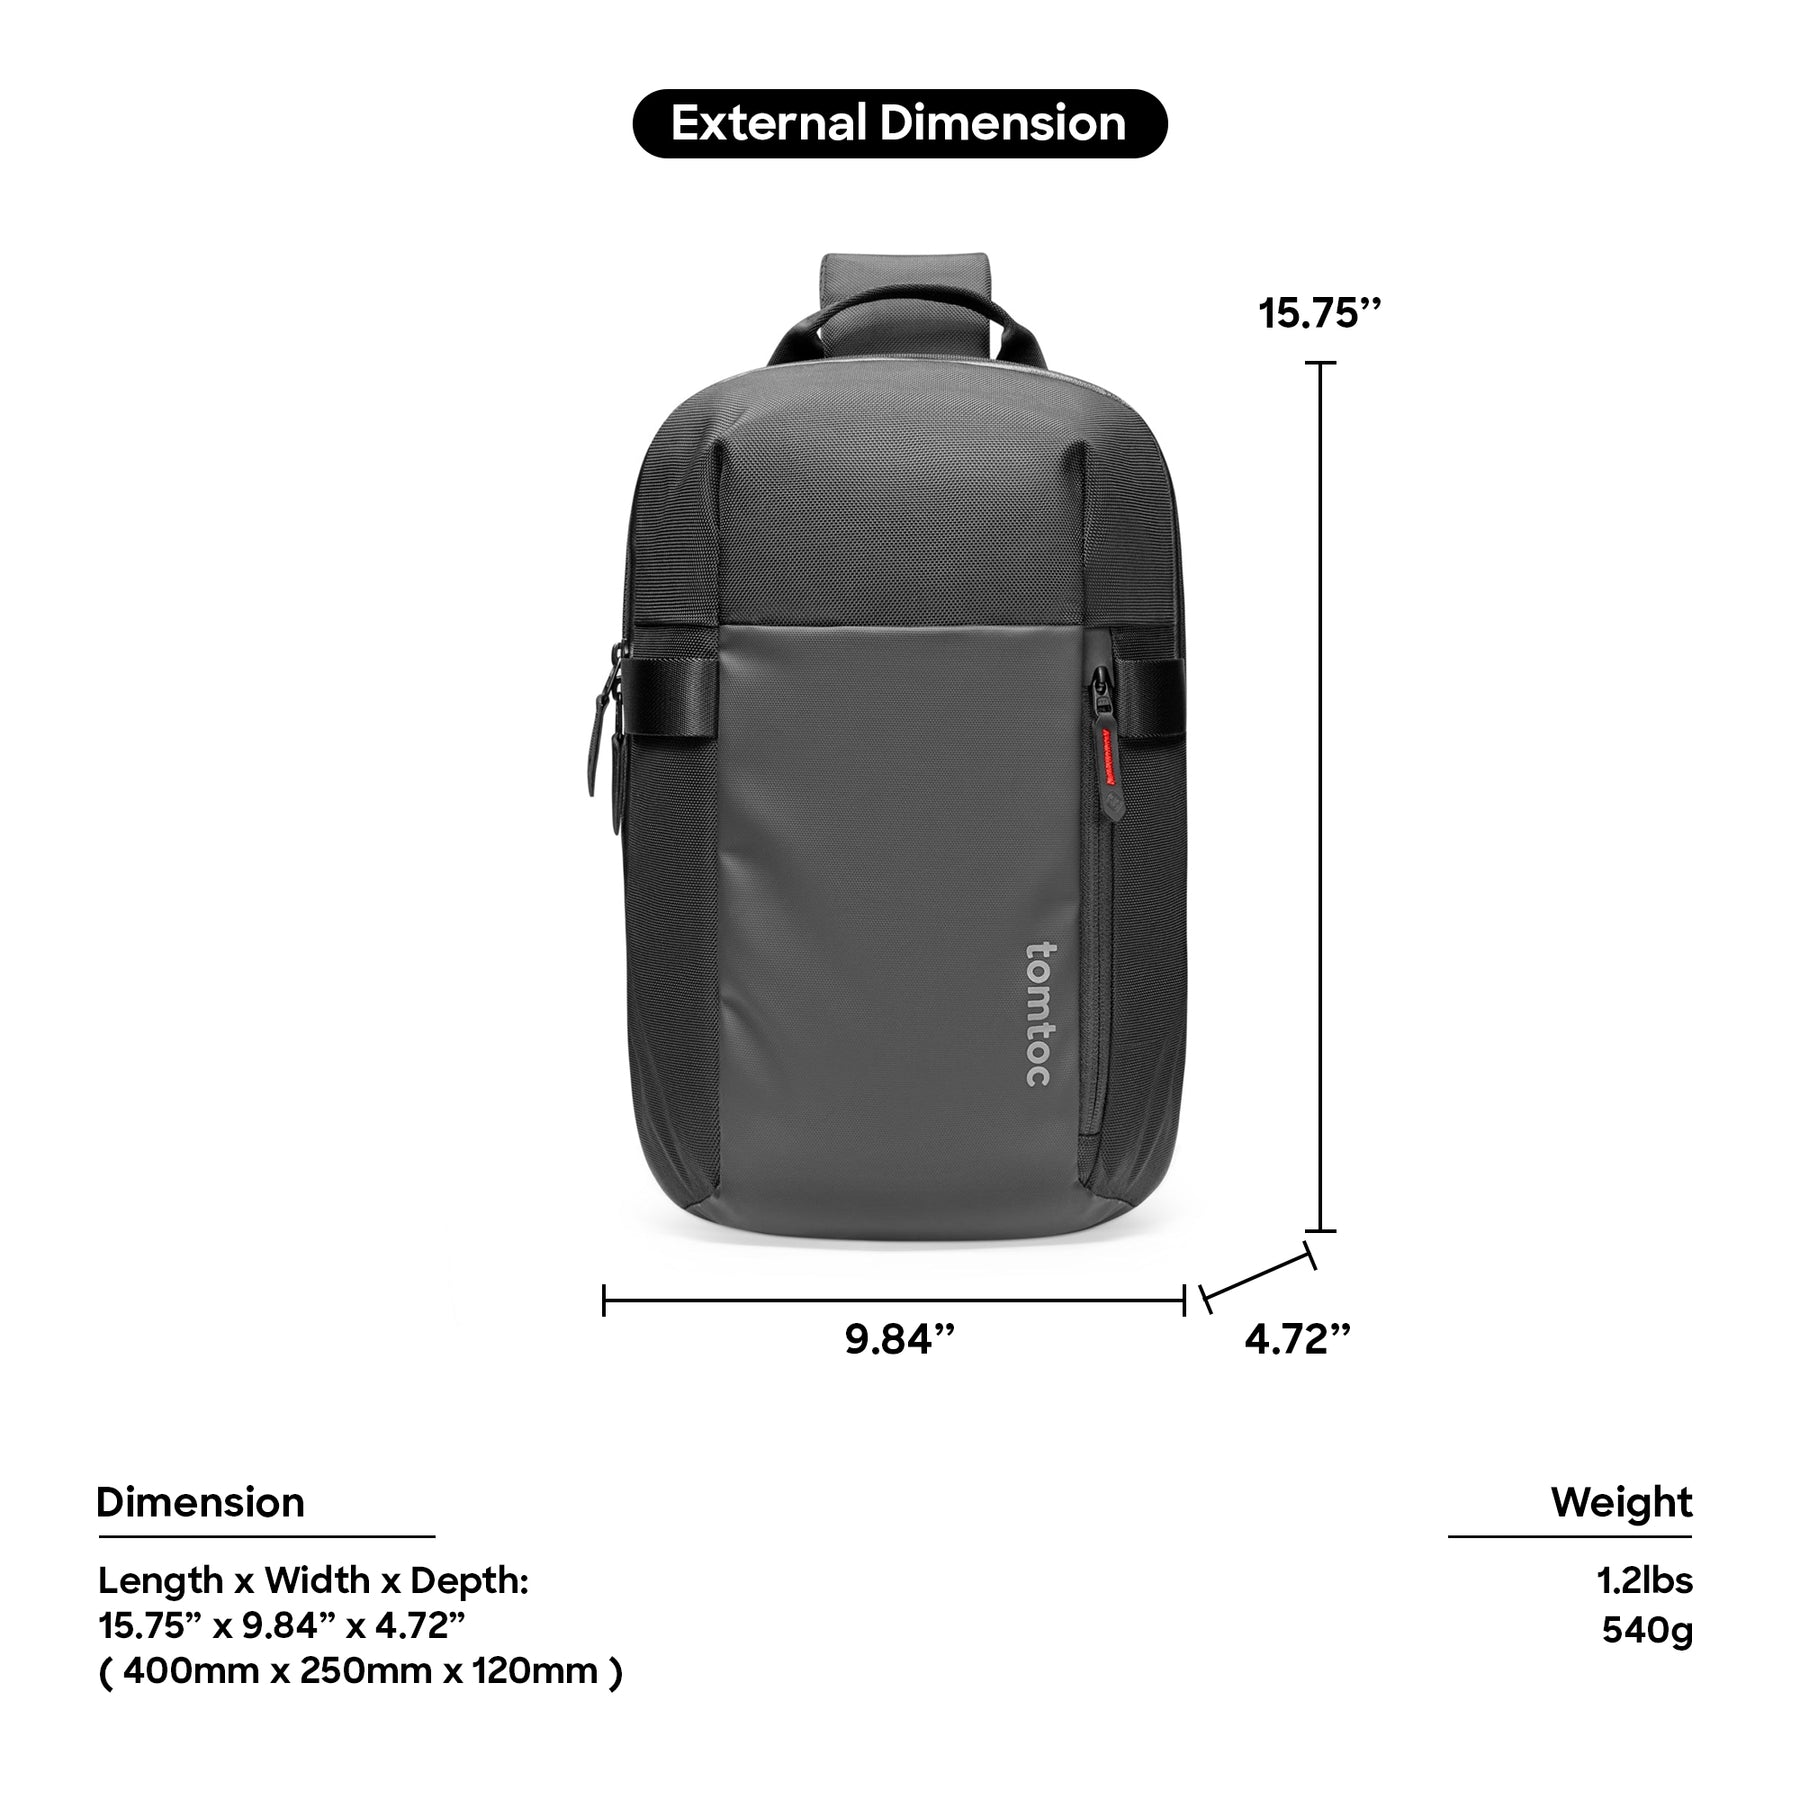 tomtoc 14 Inch Croxbody Shoulder Bag / Sling Bag / Crossbody bag / Men Bag - Khaki